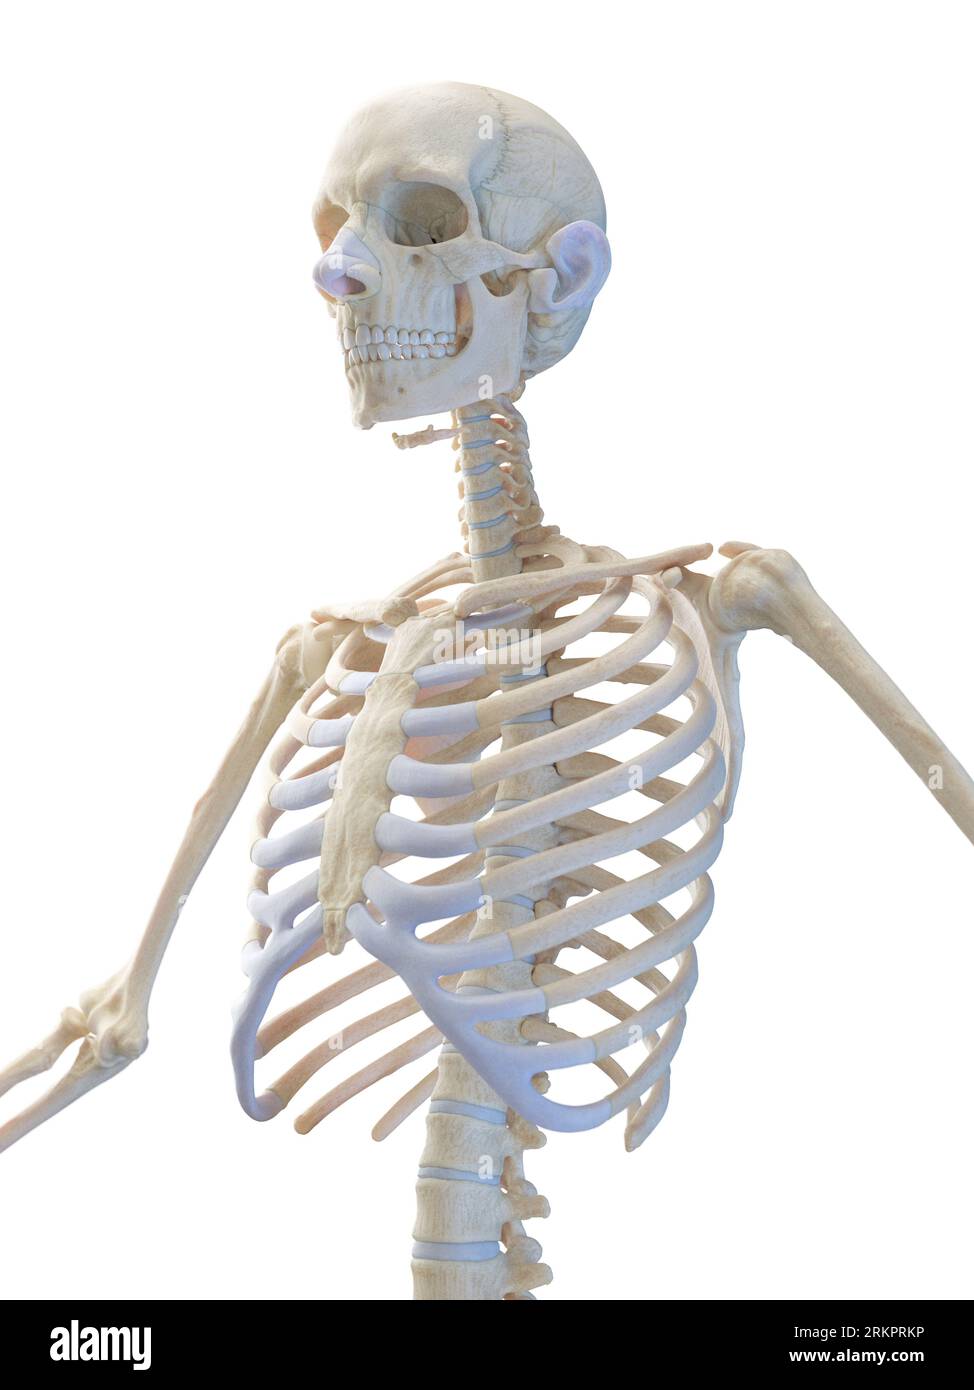 Skeletal system of the upper body, illustration Stock Photo - Alamy